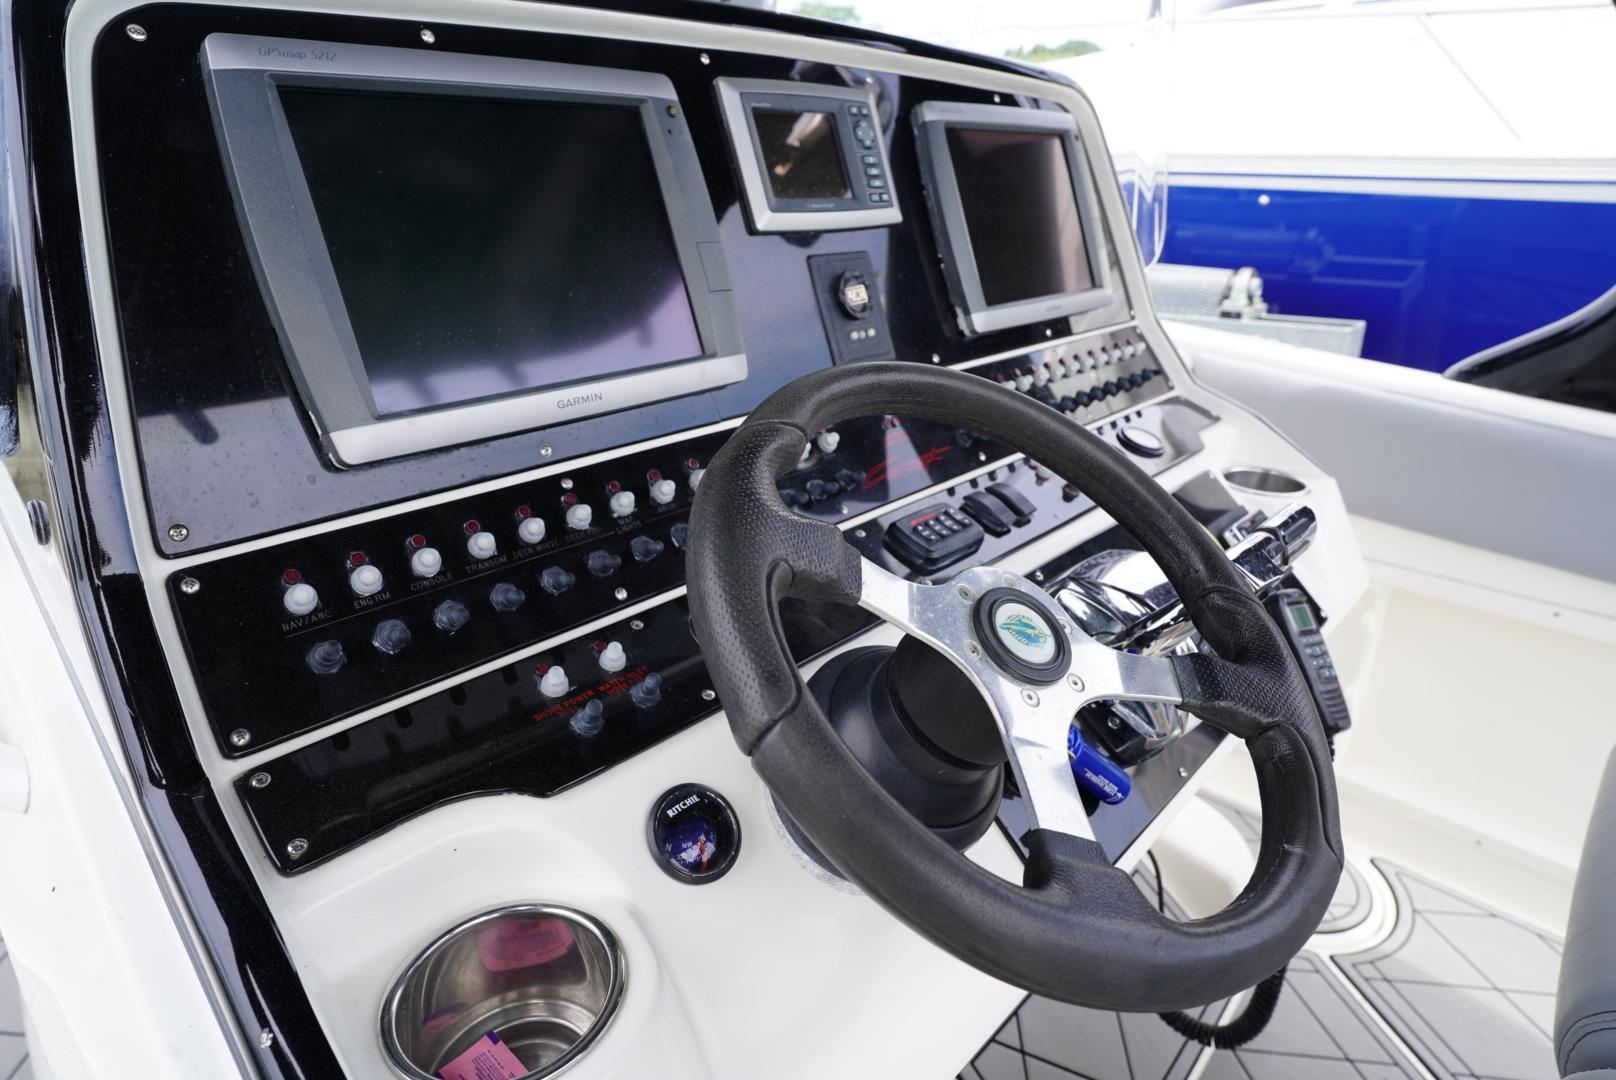 2010 Concept 4400 Sport Yacht